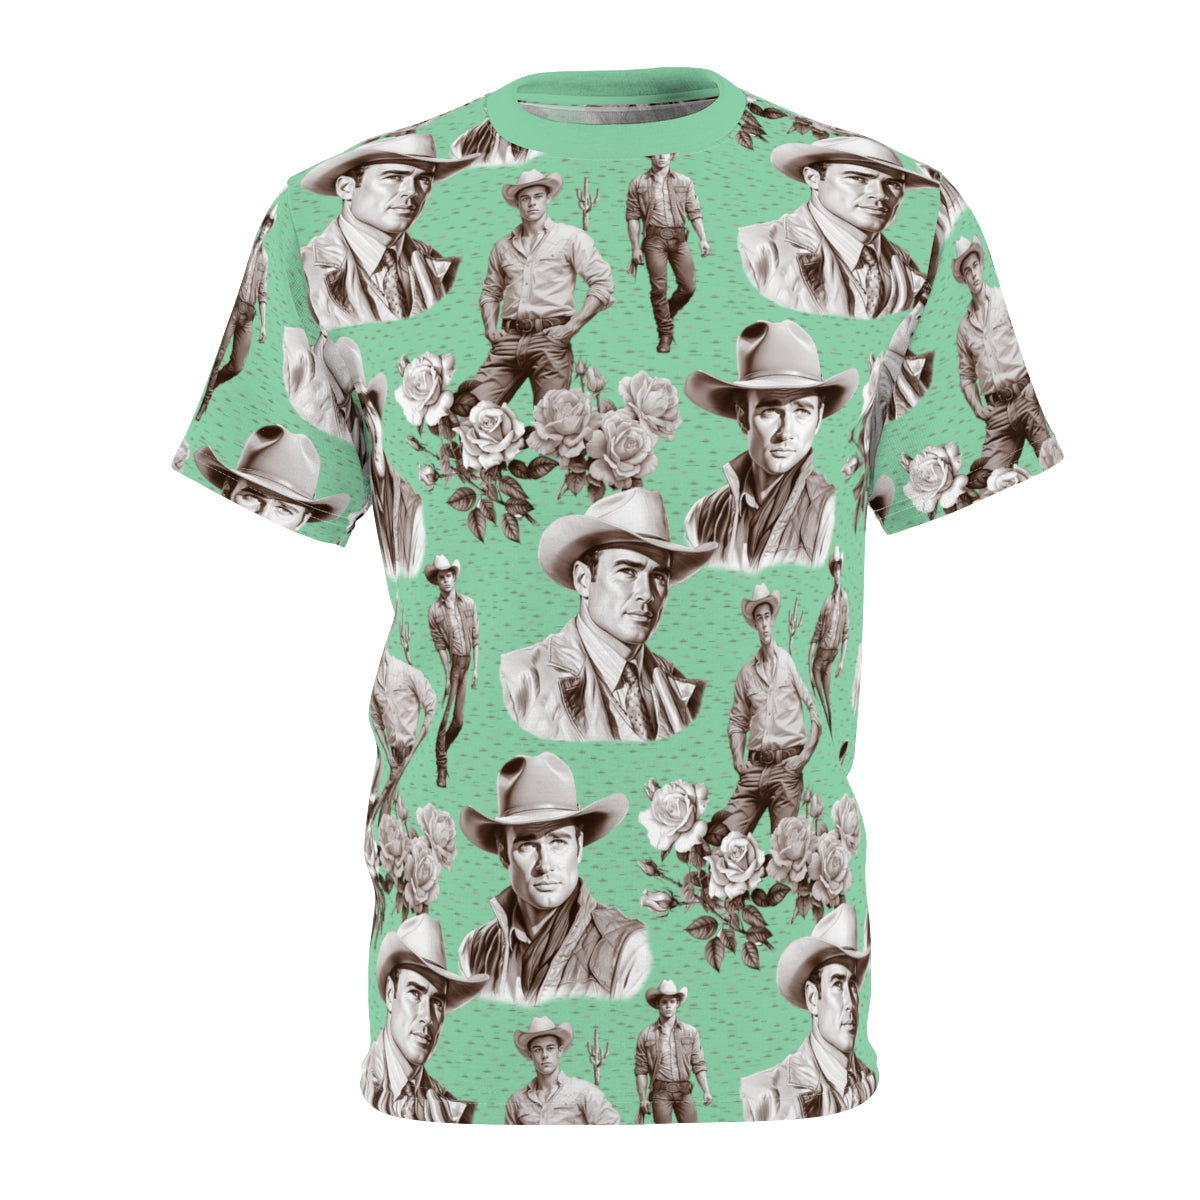 Handsome Cowboys Toile (Jade) T-Shirt by Studio Ten Design